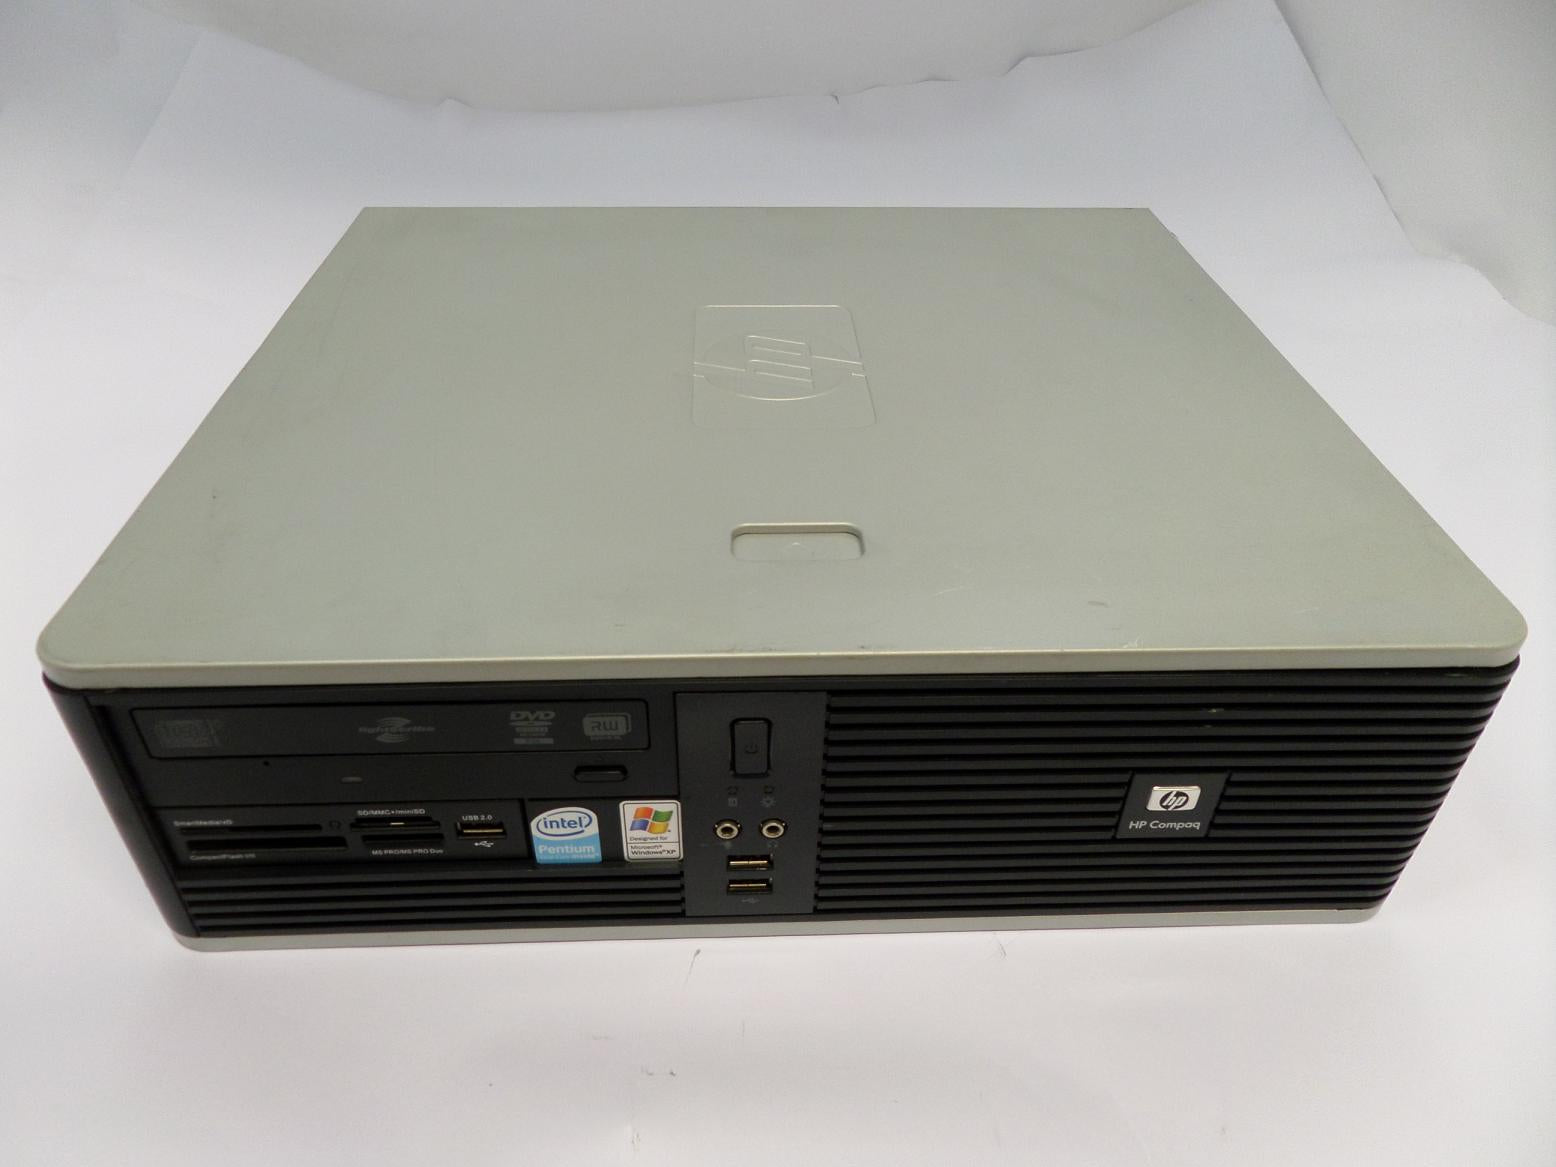 GE008ET#ABU - Hp Compaq dc5700 SFF   Intel Pentium Dual Core  1.80GHz -  2Gb  RAM  No HDD - USED